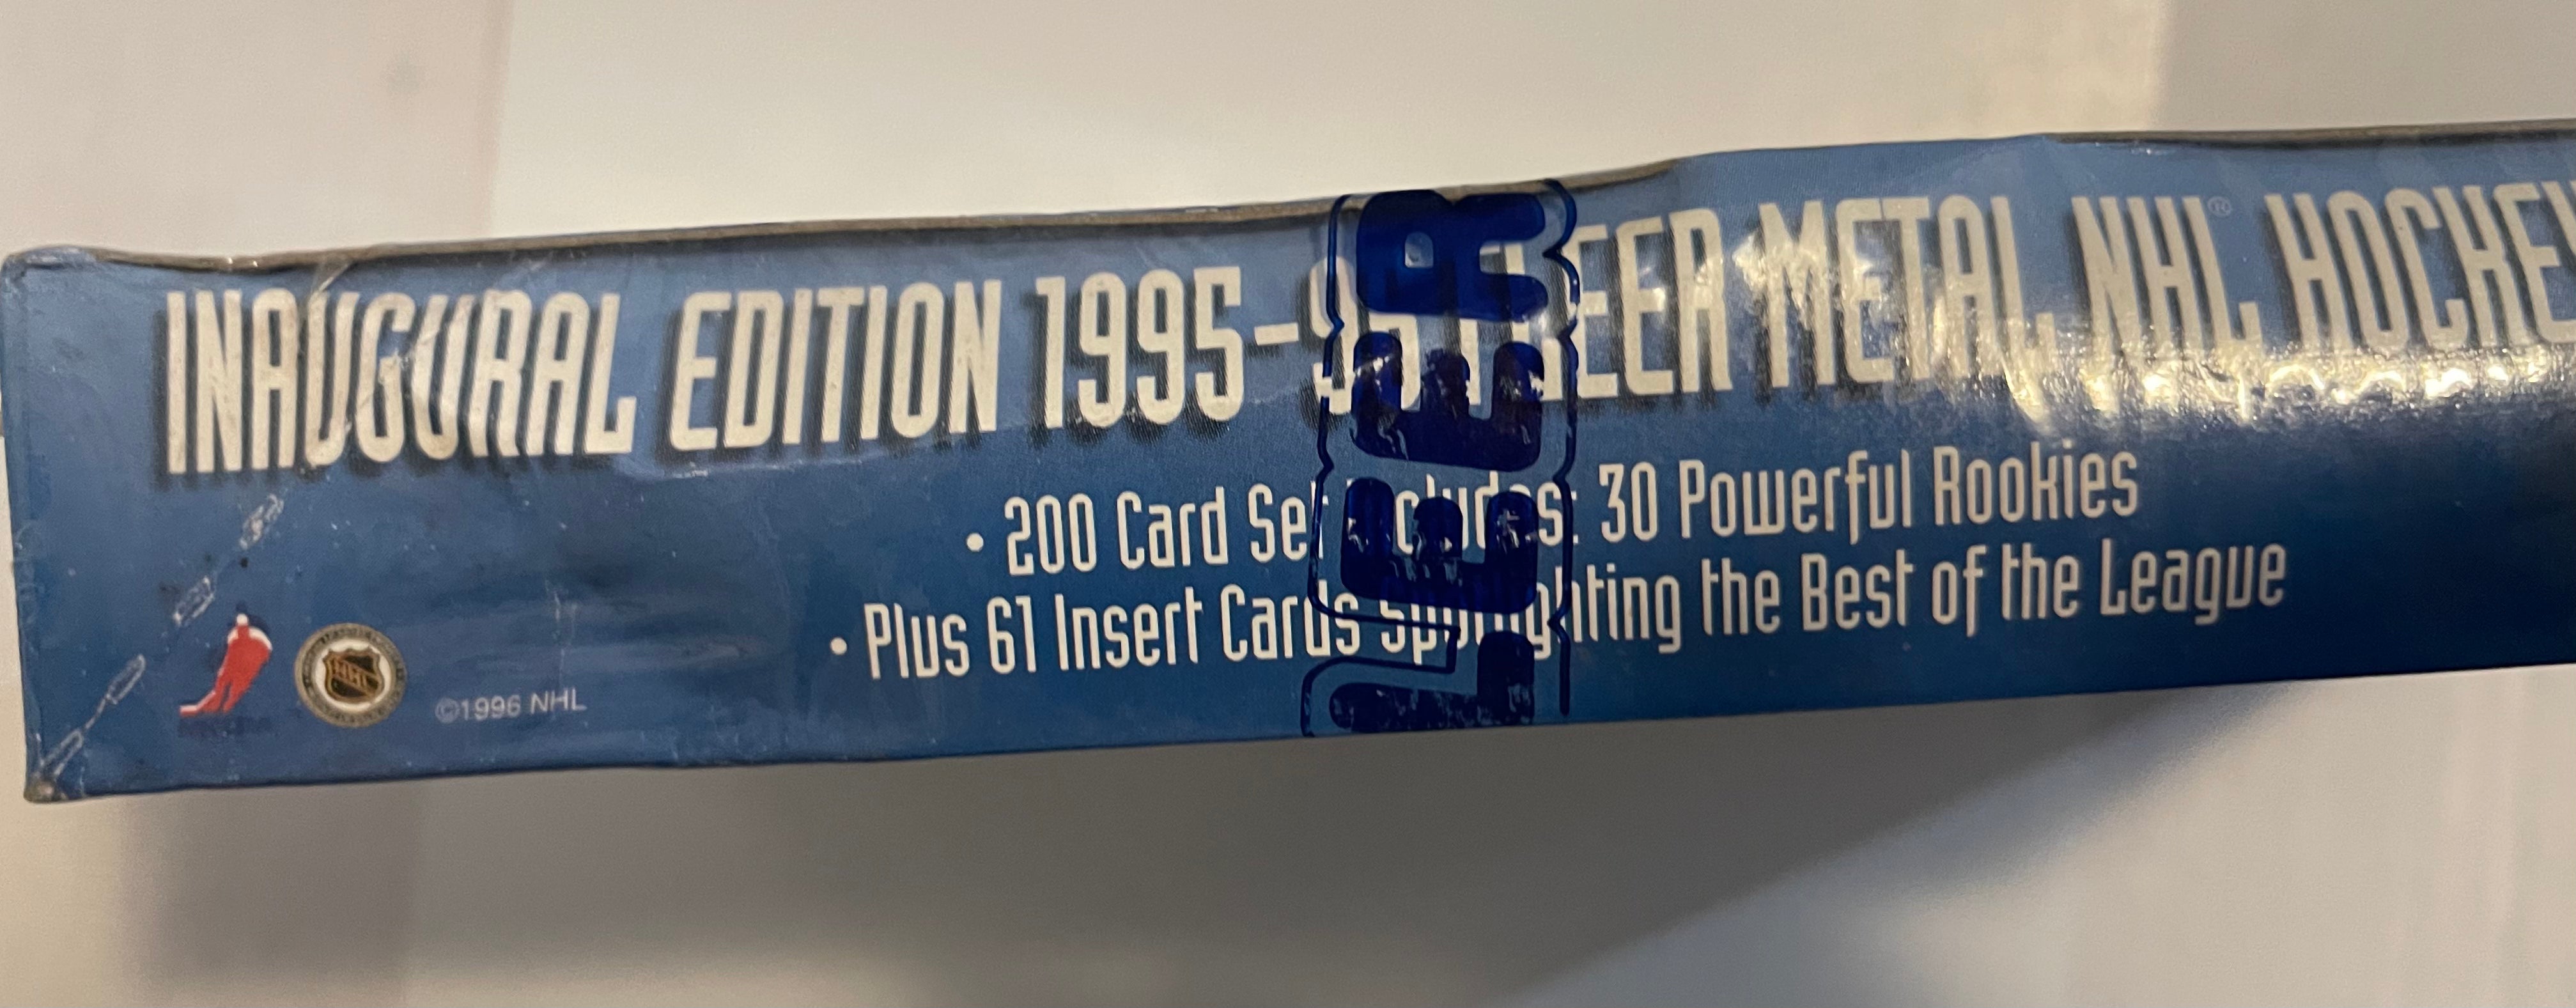 Fleer Metal hockey cards 36 packs rare factory sealed box 1995-96